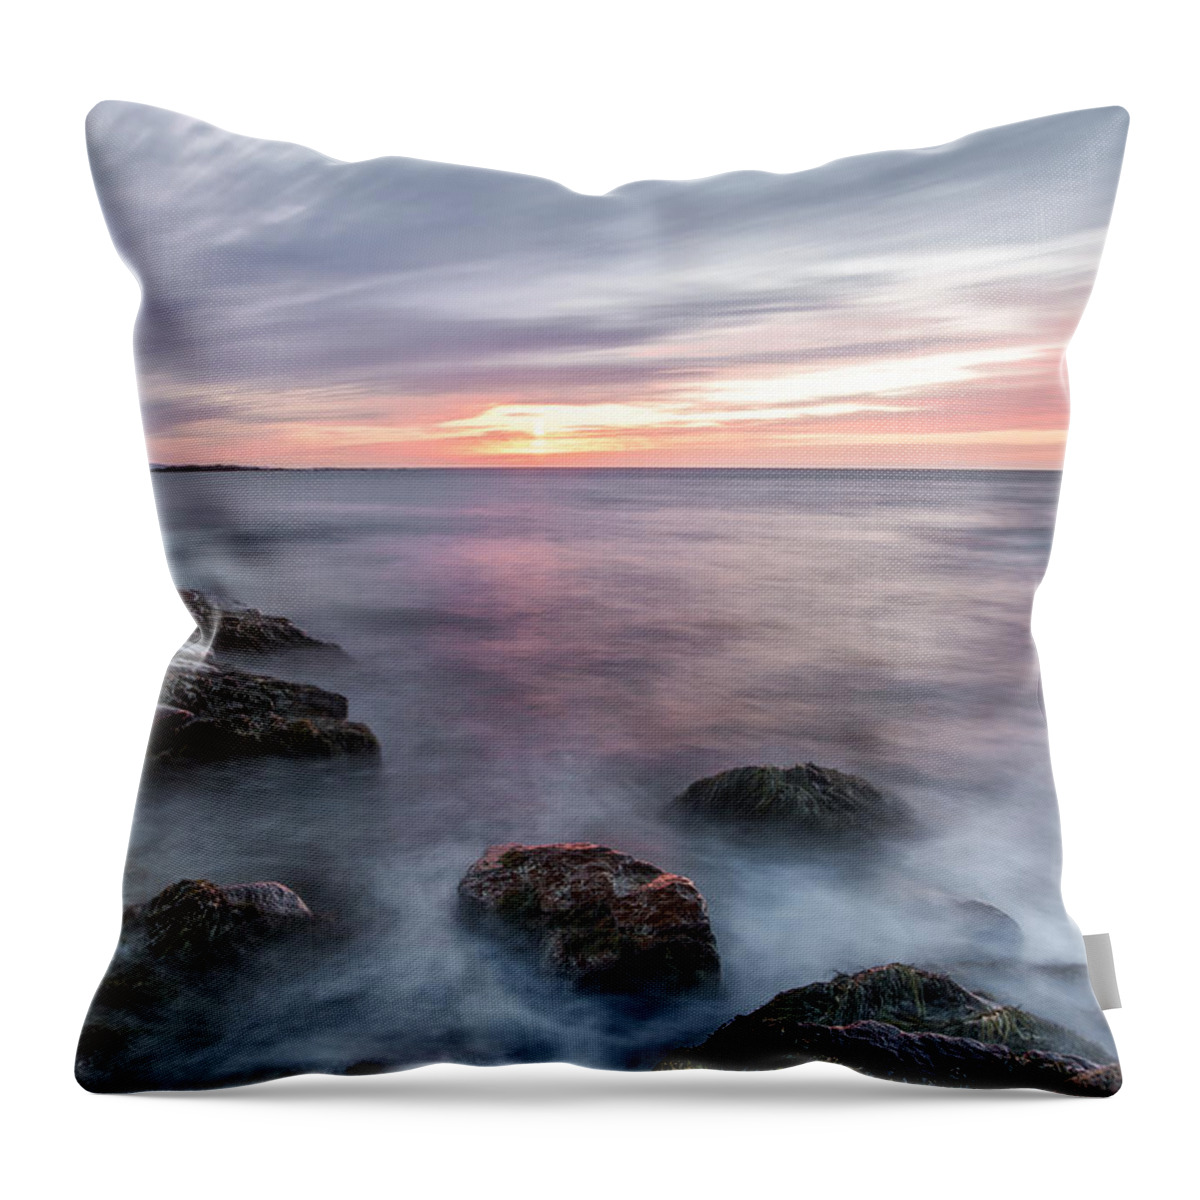 Horizontal Throw Pillow featuring the photograph Rhythmic Dawn by Jon Glaser